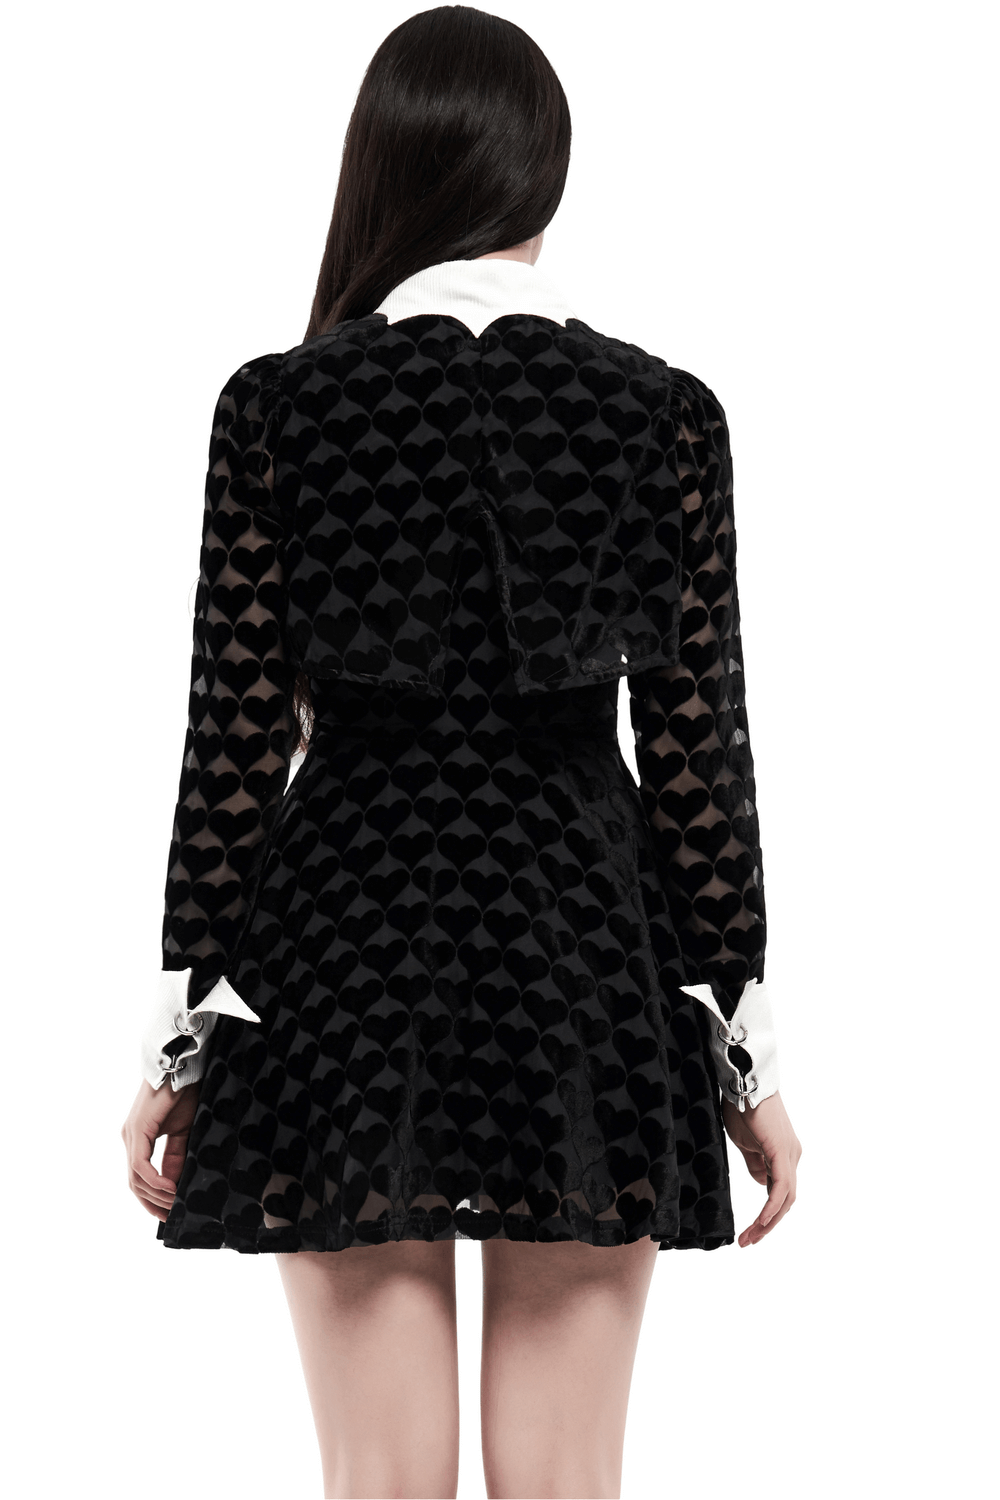 Gothic Velvet Short Dress with White Cuffs and Bat Collar